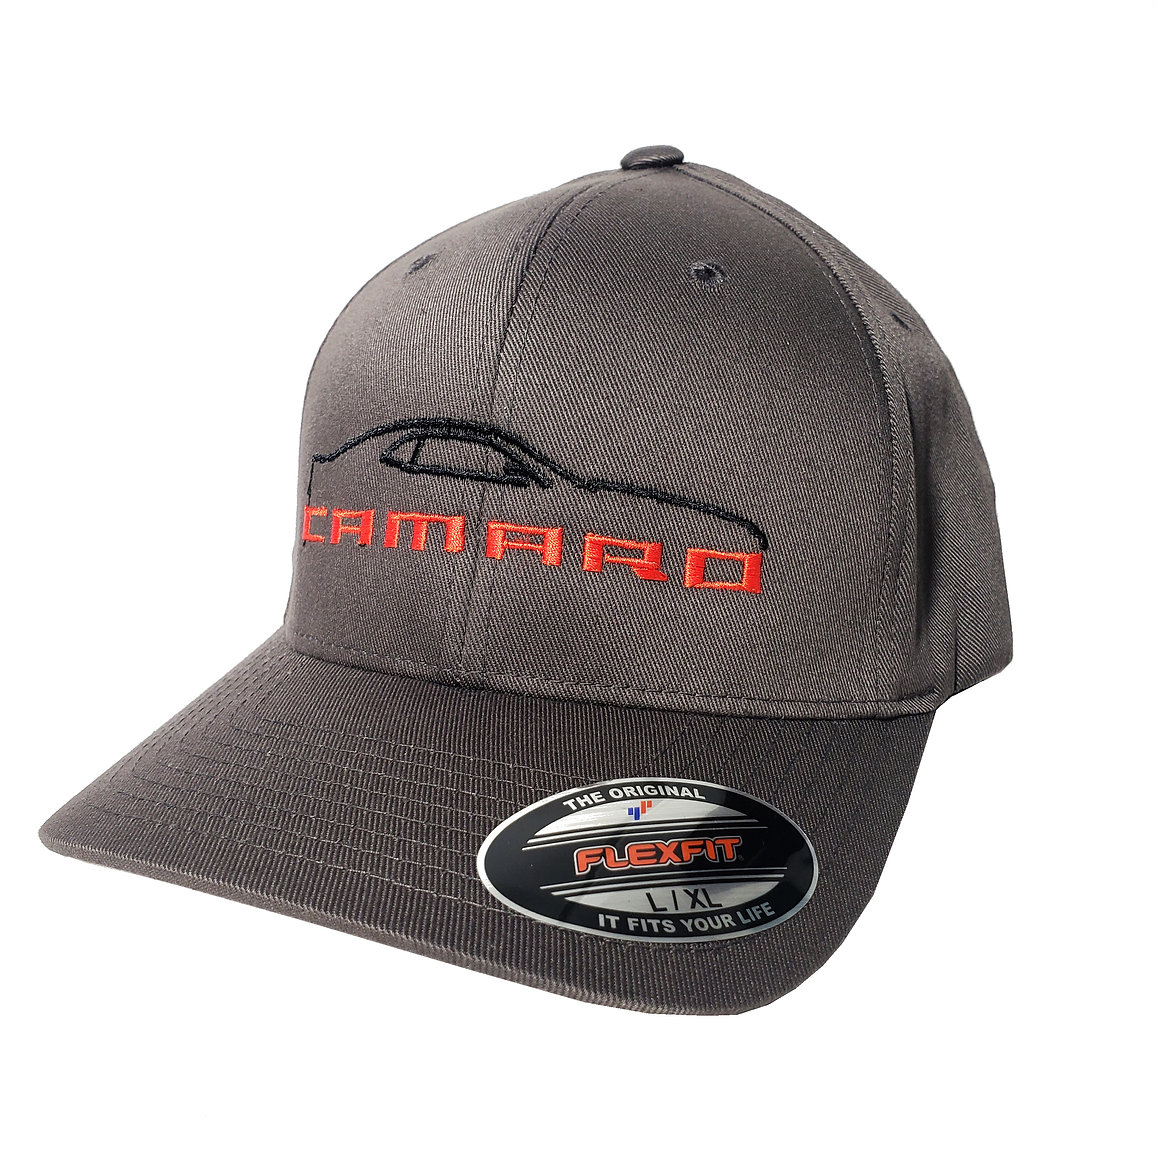 Camaro 5th Gen Silhouette Flex Fit Hat : Black On Sale |West Coast Camaro